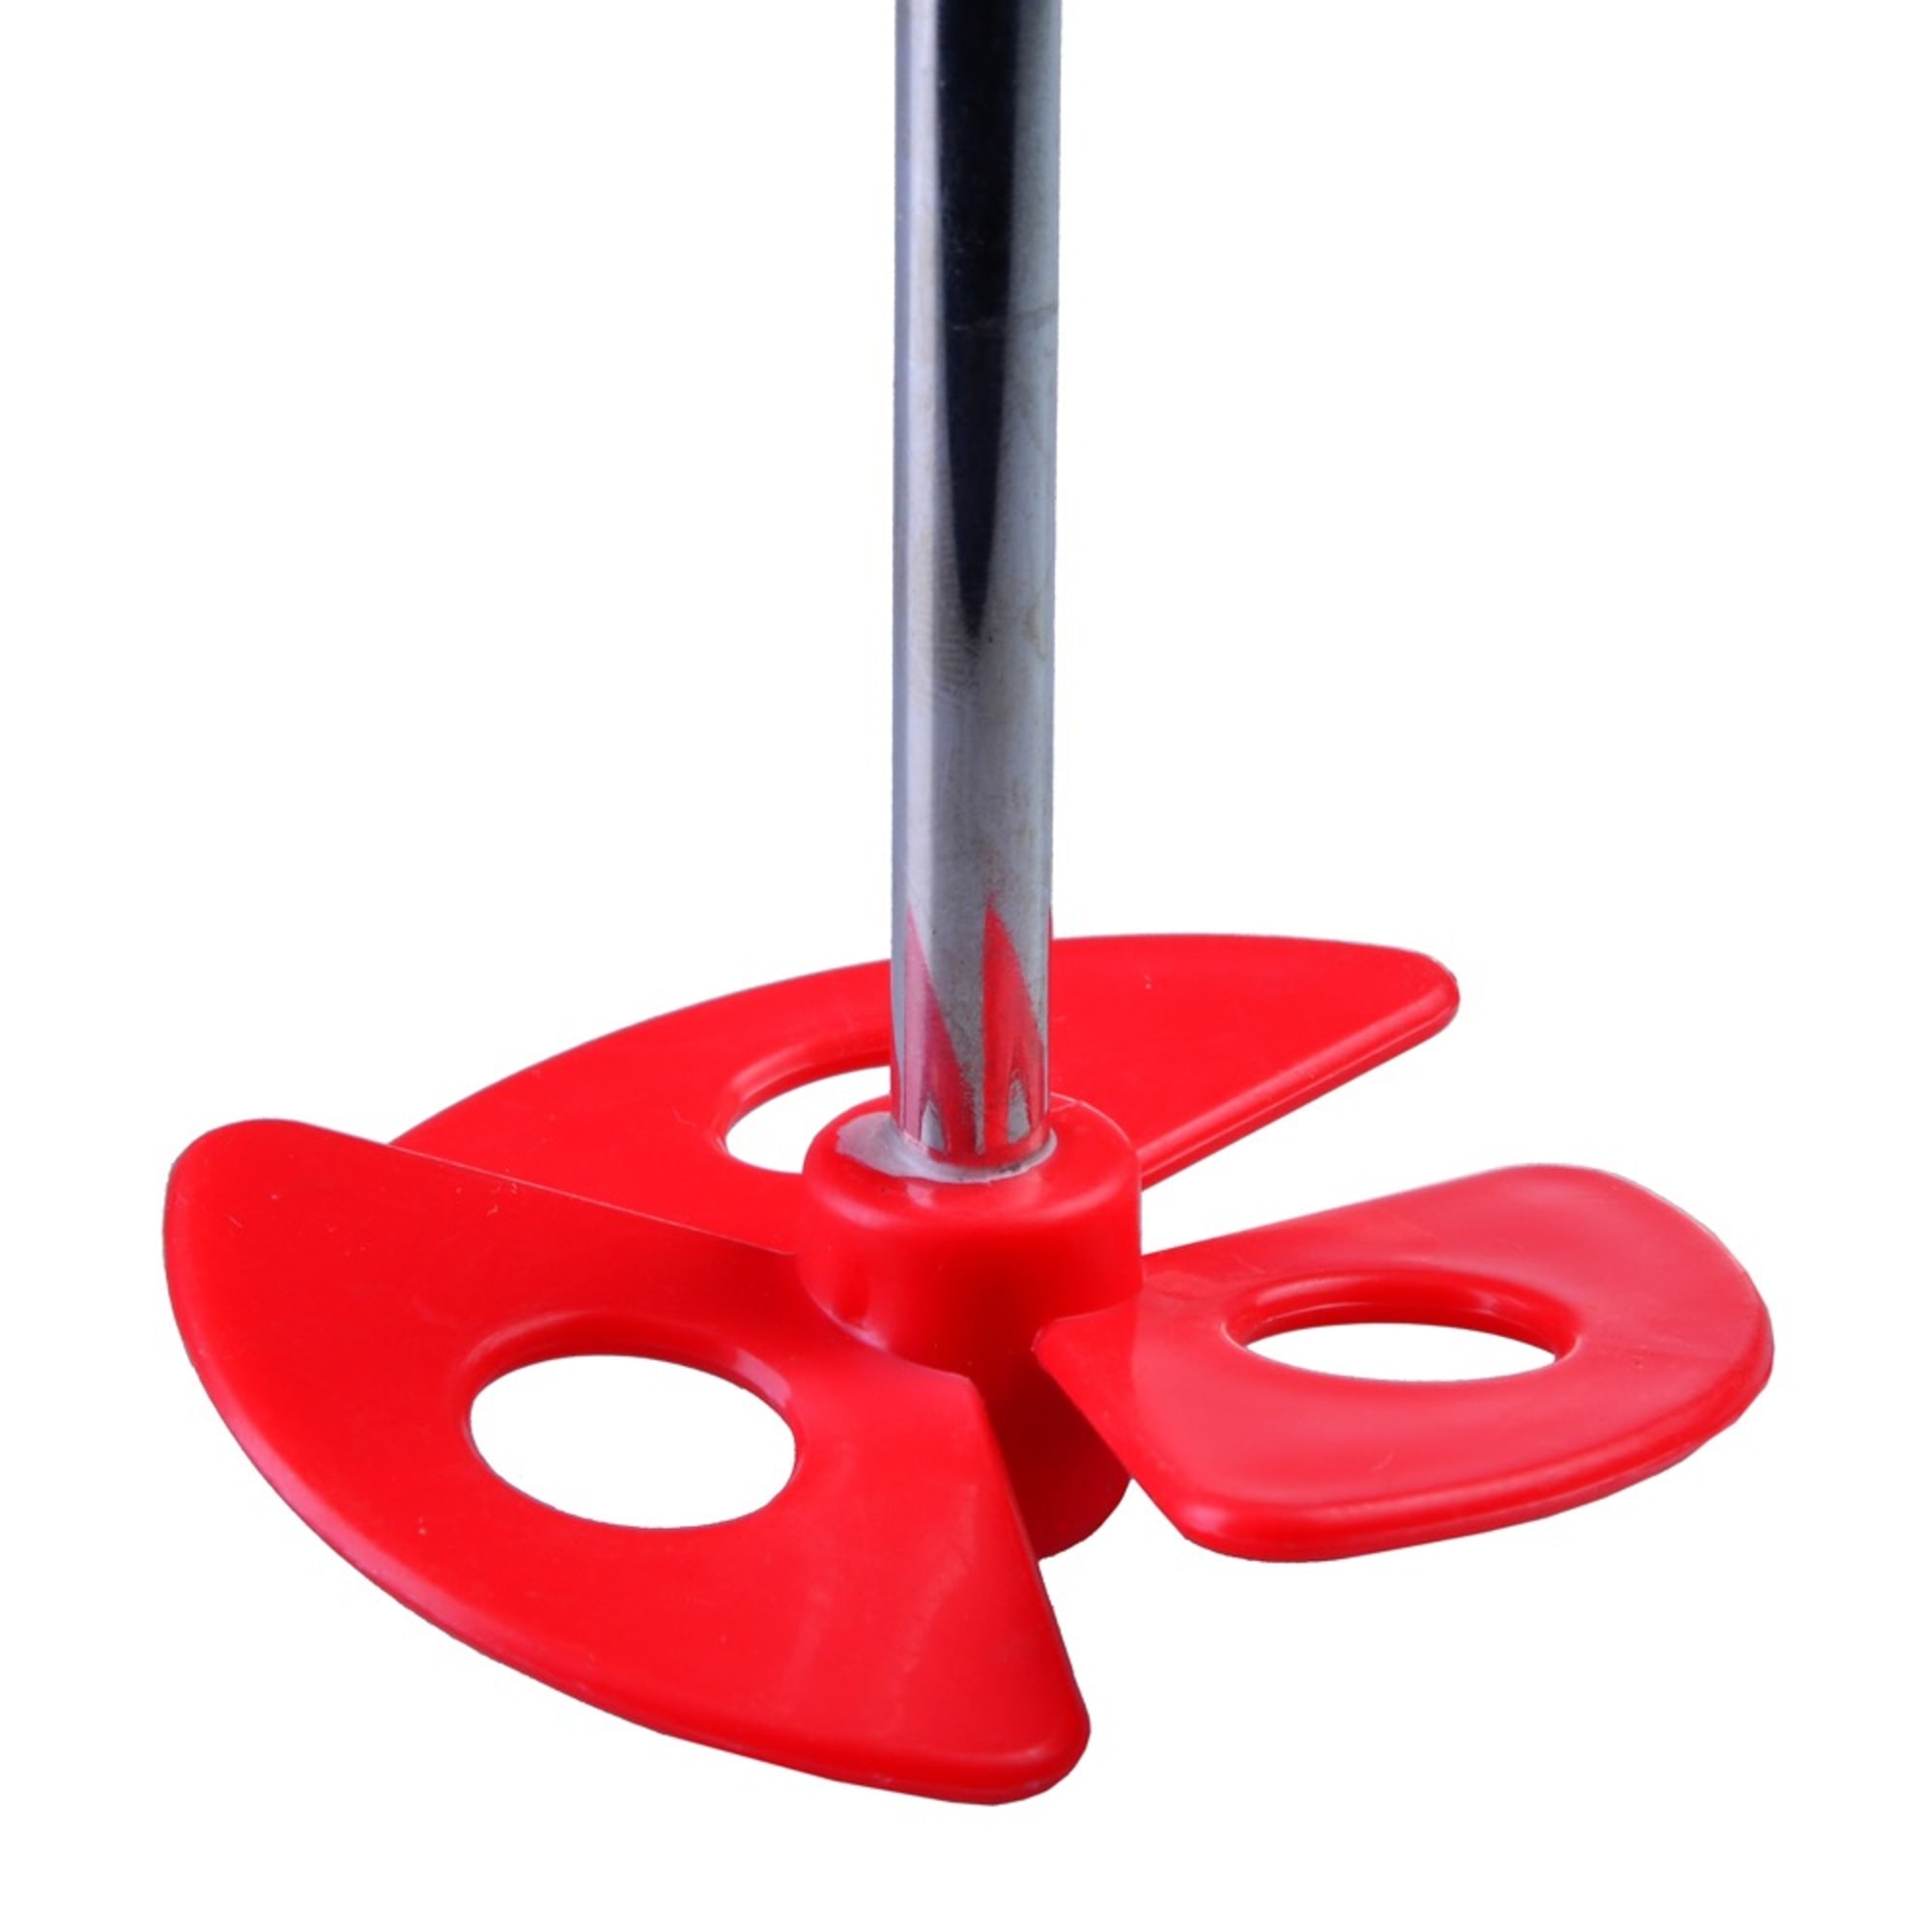 Stirrer with plastic propeller (up to 5 kg), image 2